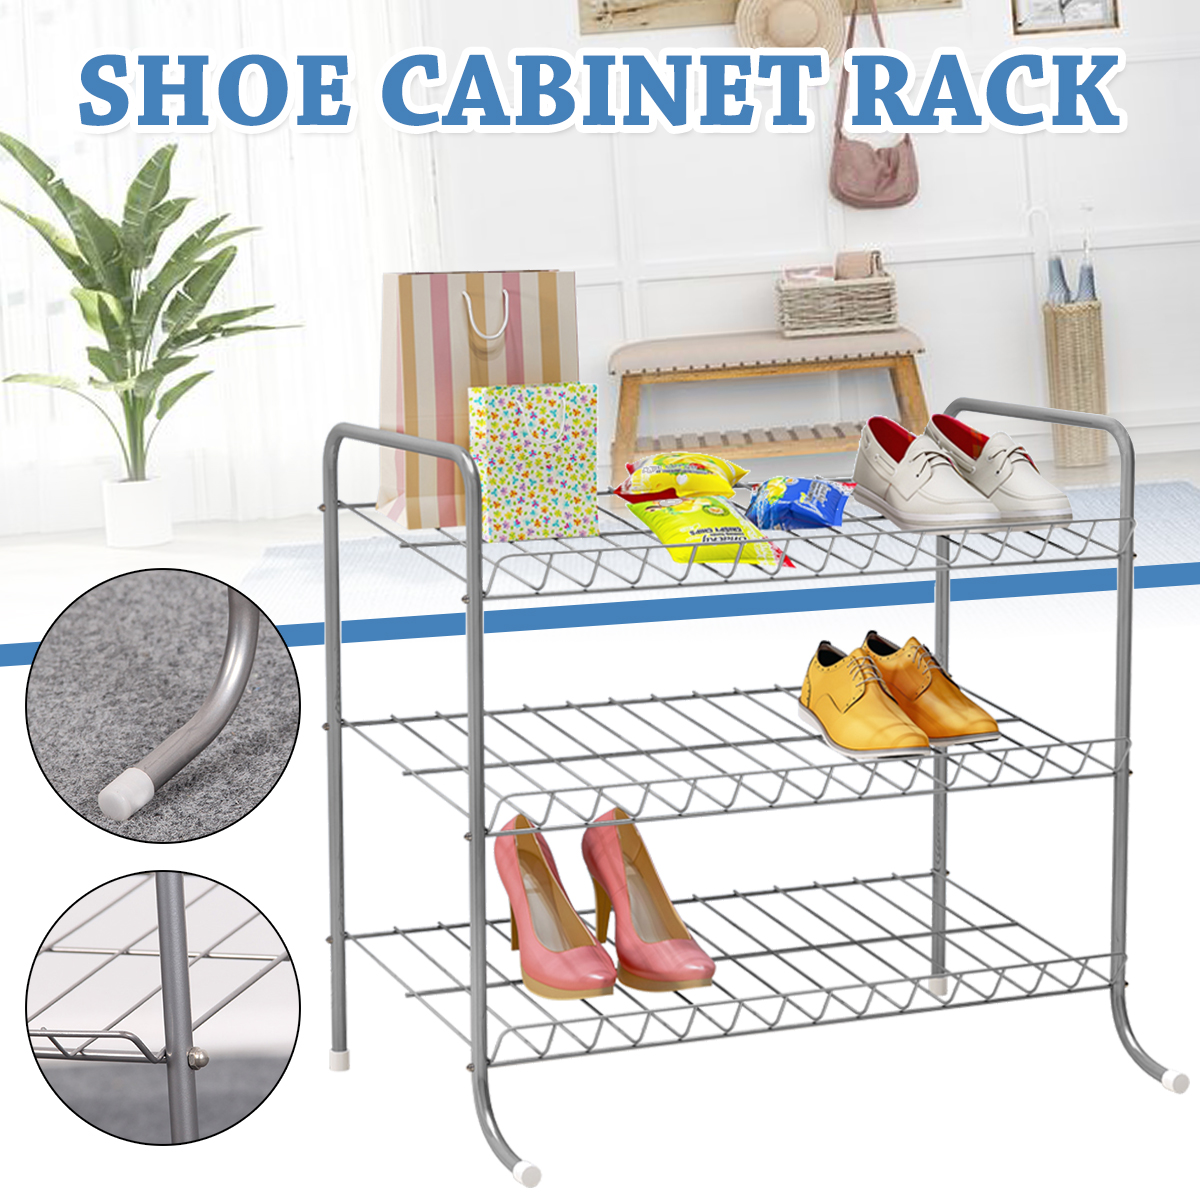 Cabinet-Rack-Storage-Shelf-Shoe-Racks-Organizer-Stand-Metal-Holder-Home-Kitchen-Tool-1617198-8